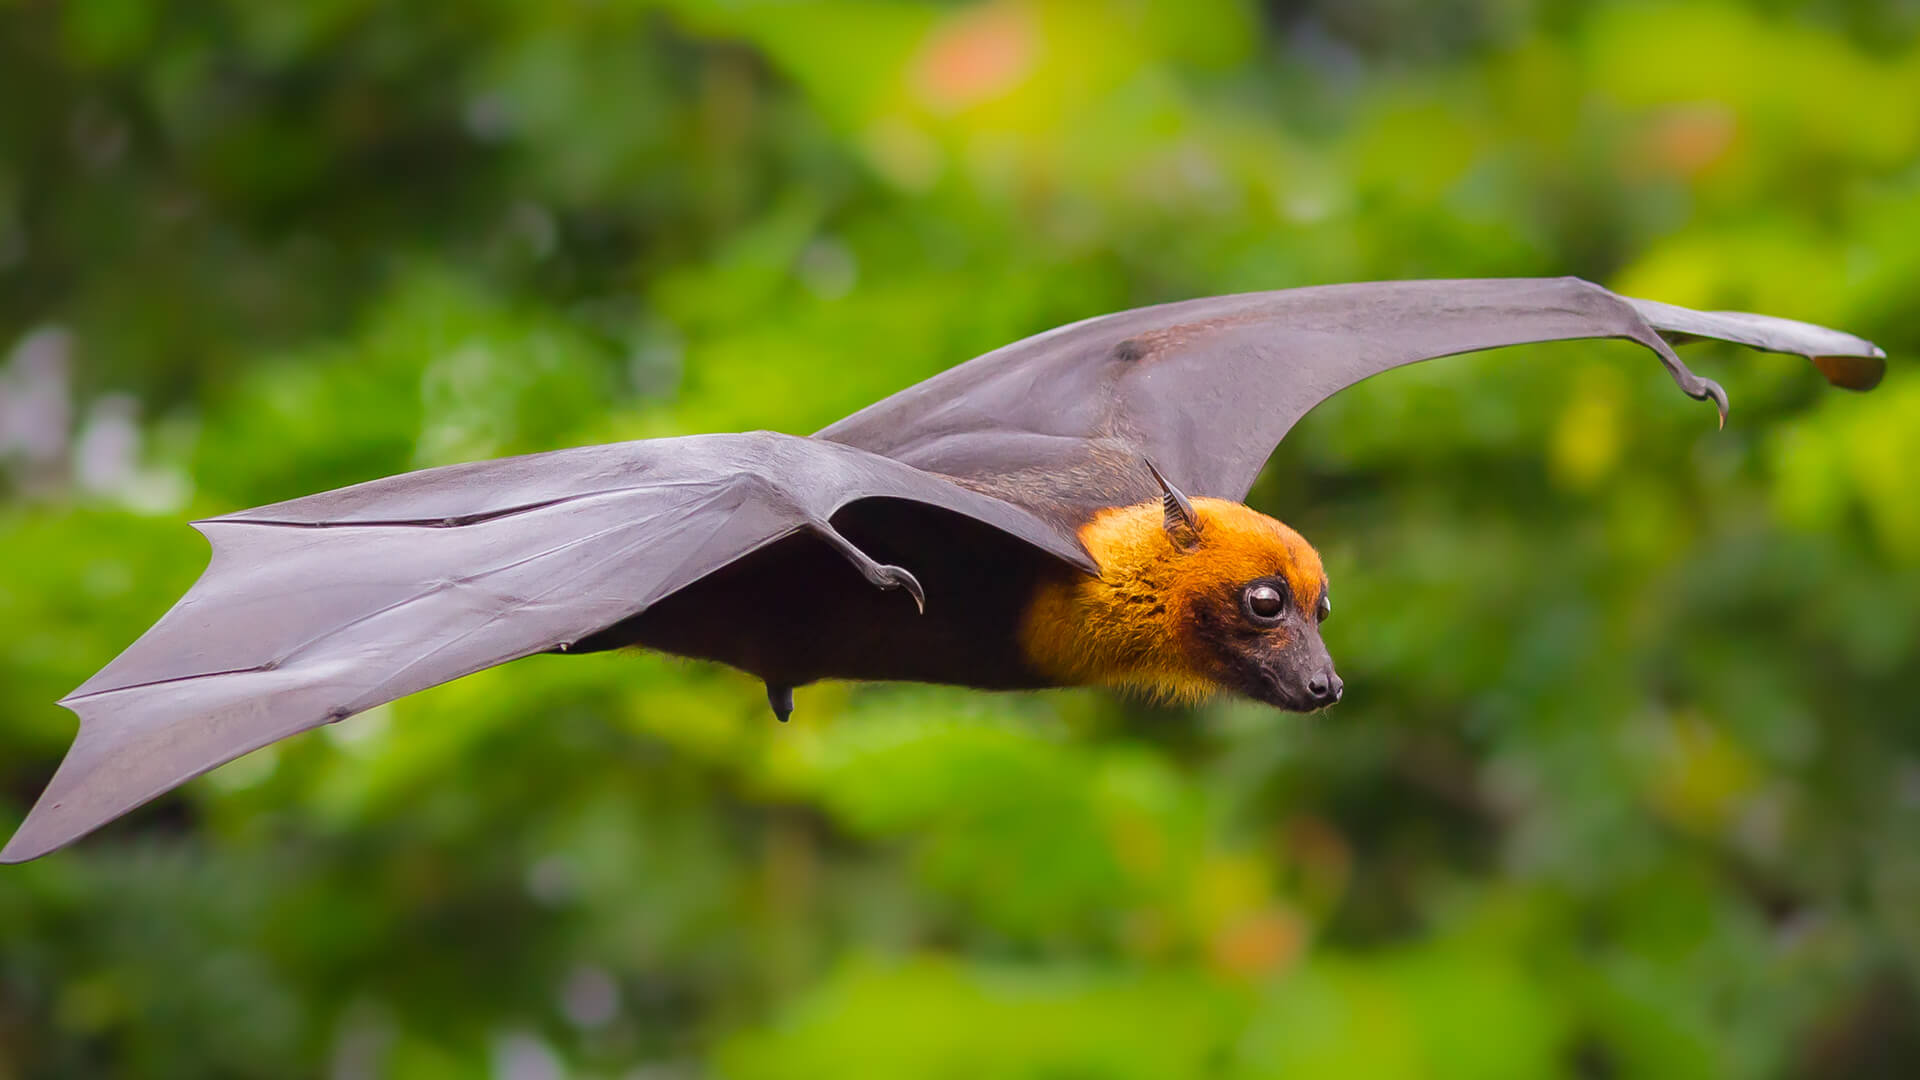 Bat | San Diego Zoo Animals & Plants